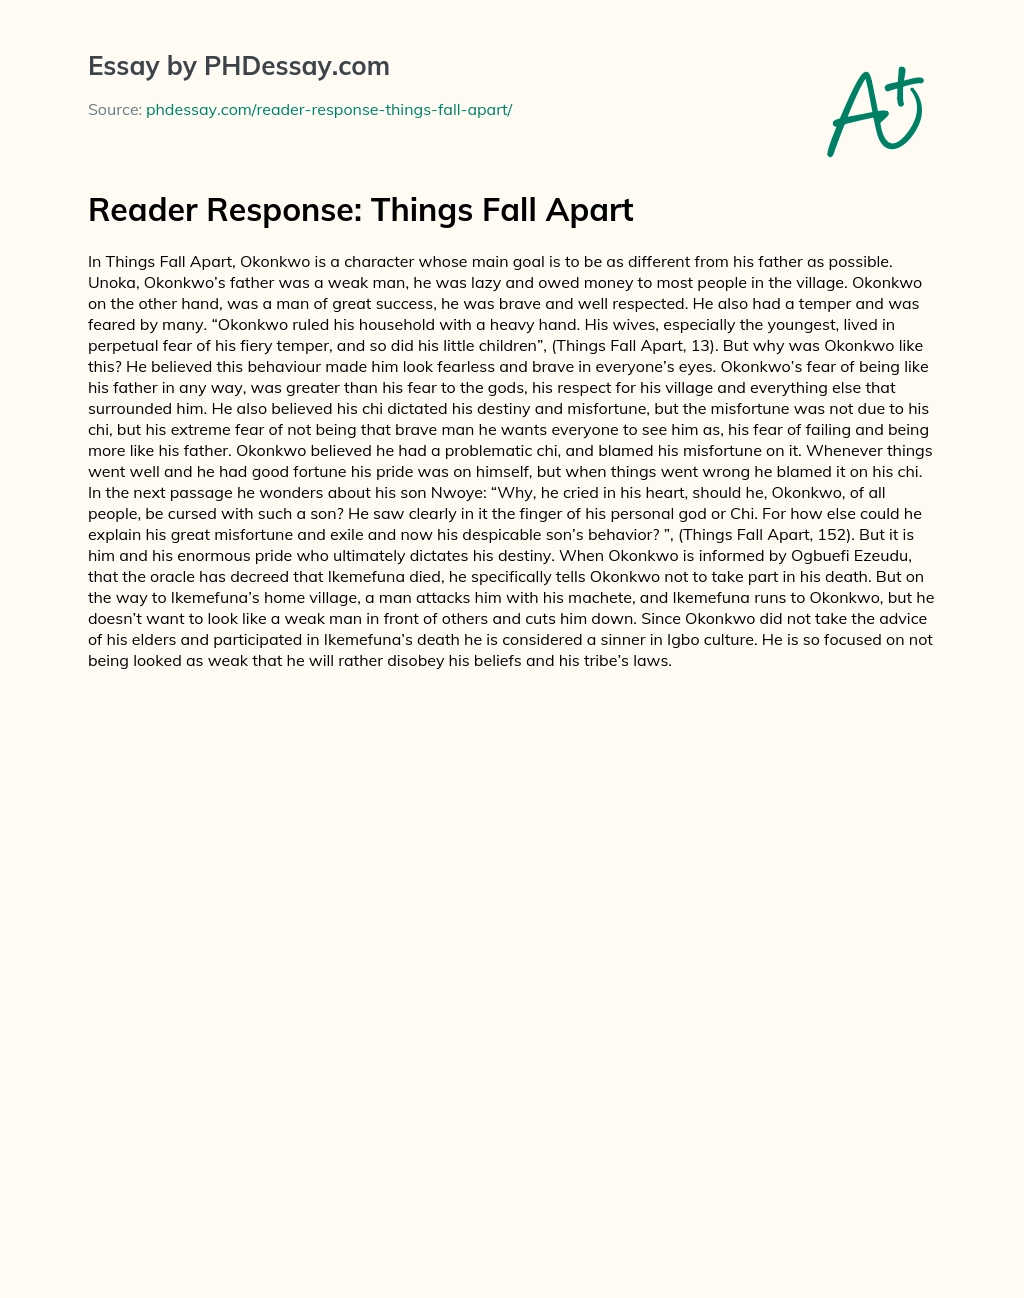 Reader Response: Things Fall Apart essay